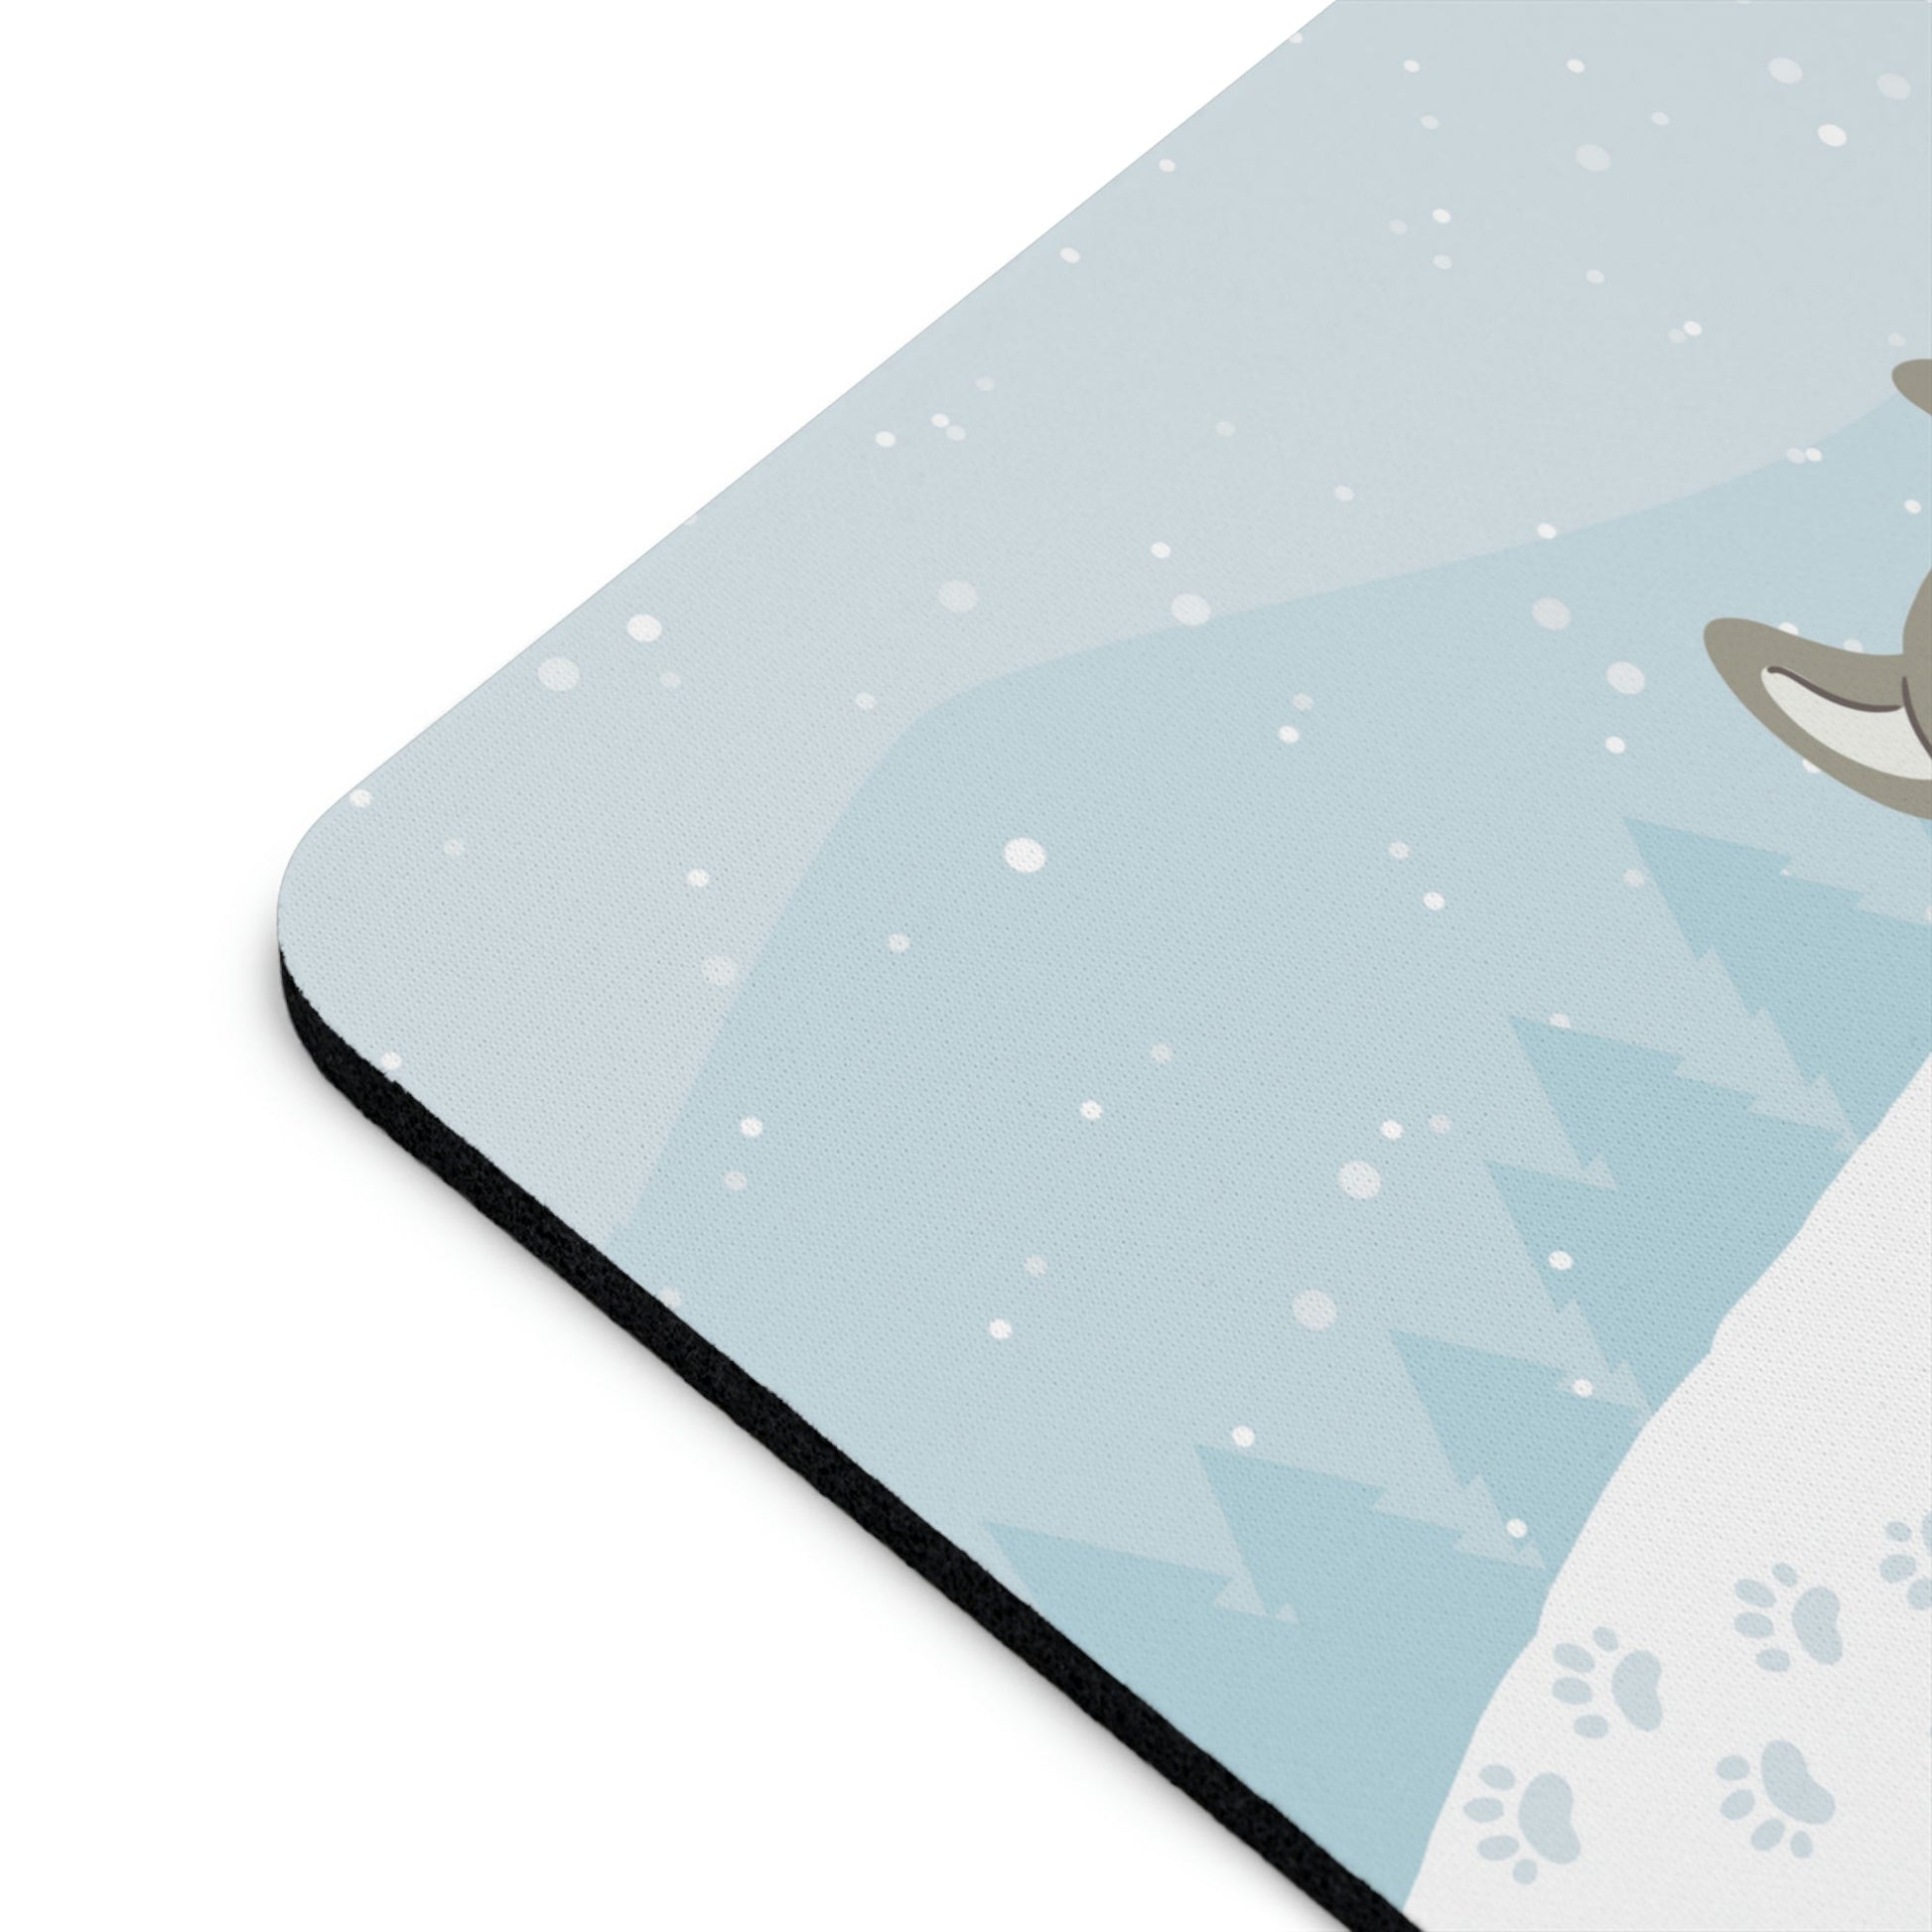 Let Eat Snow Cute Dog Anime Snow Ergonomic Non-slip Creative Design Mouse Pad Ichaku [Perfect Gifts Selection]